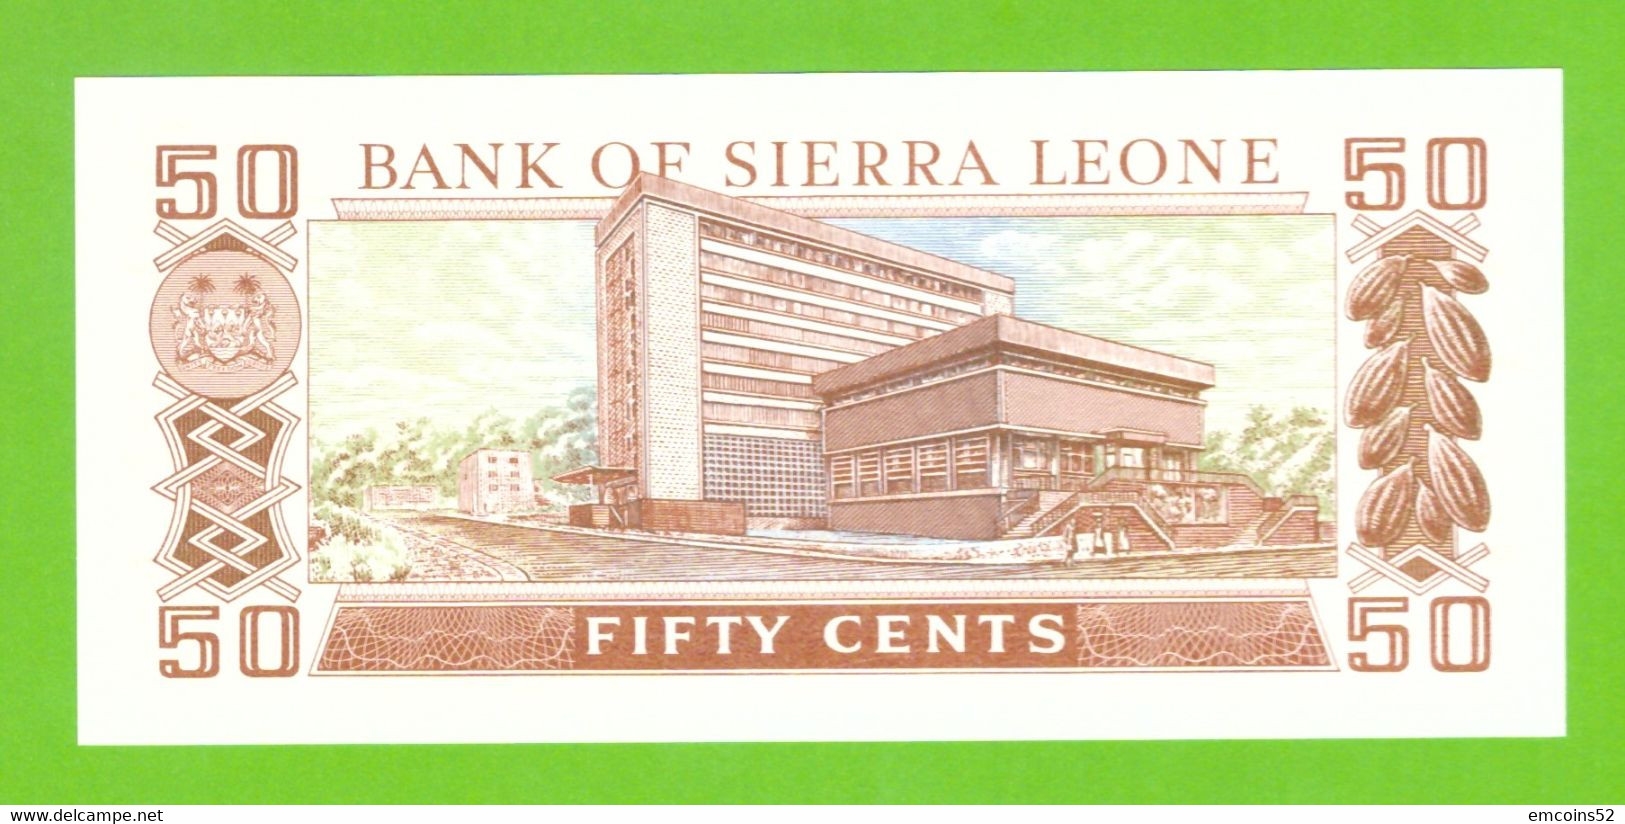 SIERRA LEONE 50 CENTS 1984  P-4e UNC - Sierra Leone